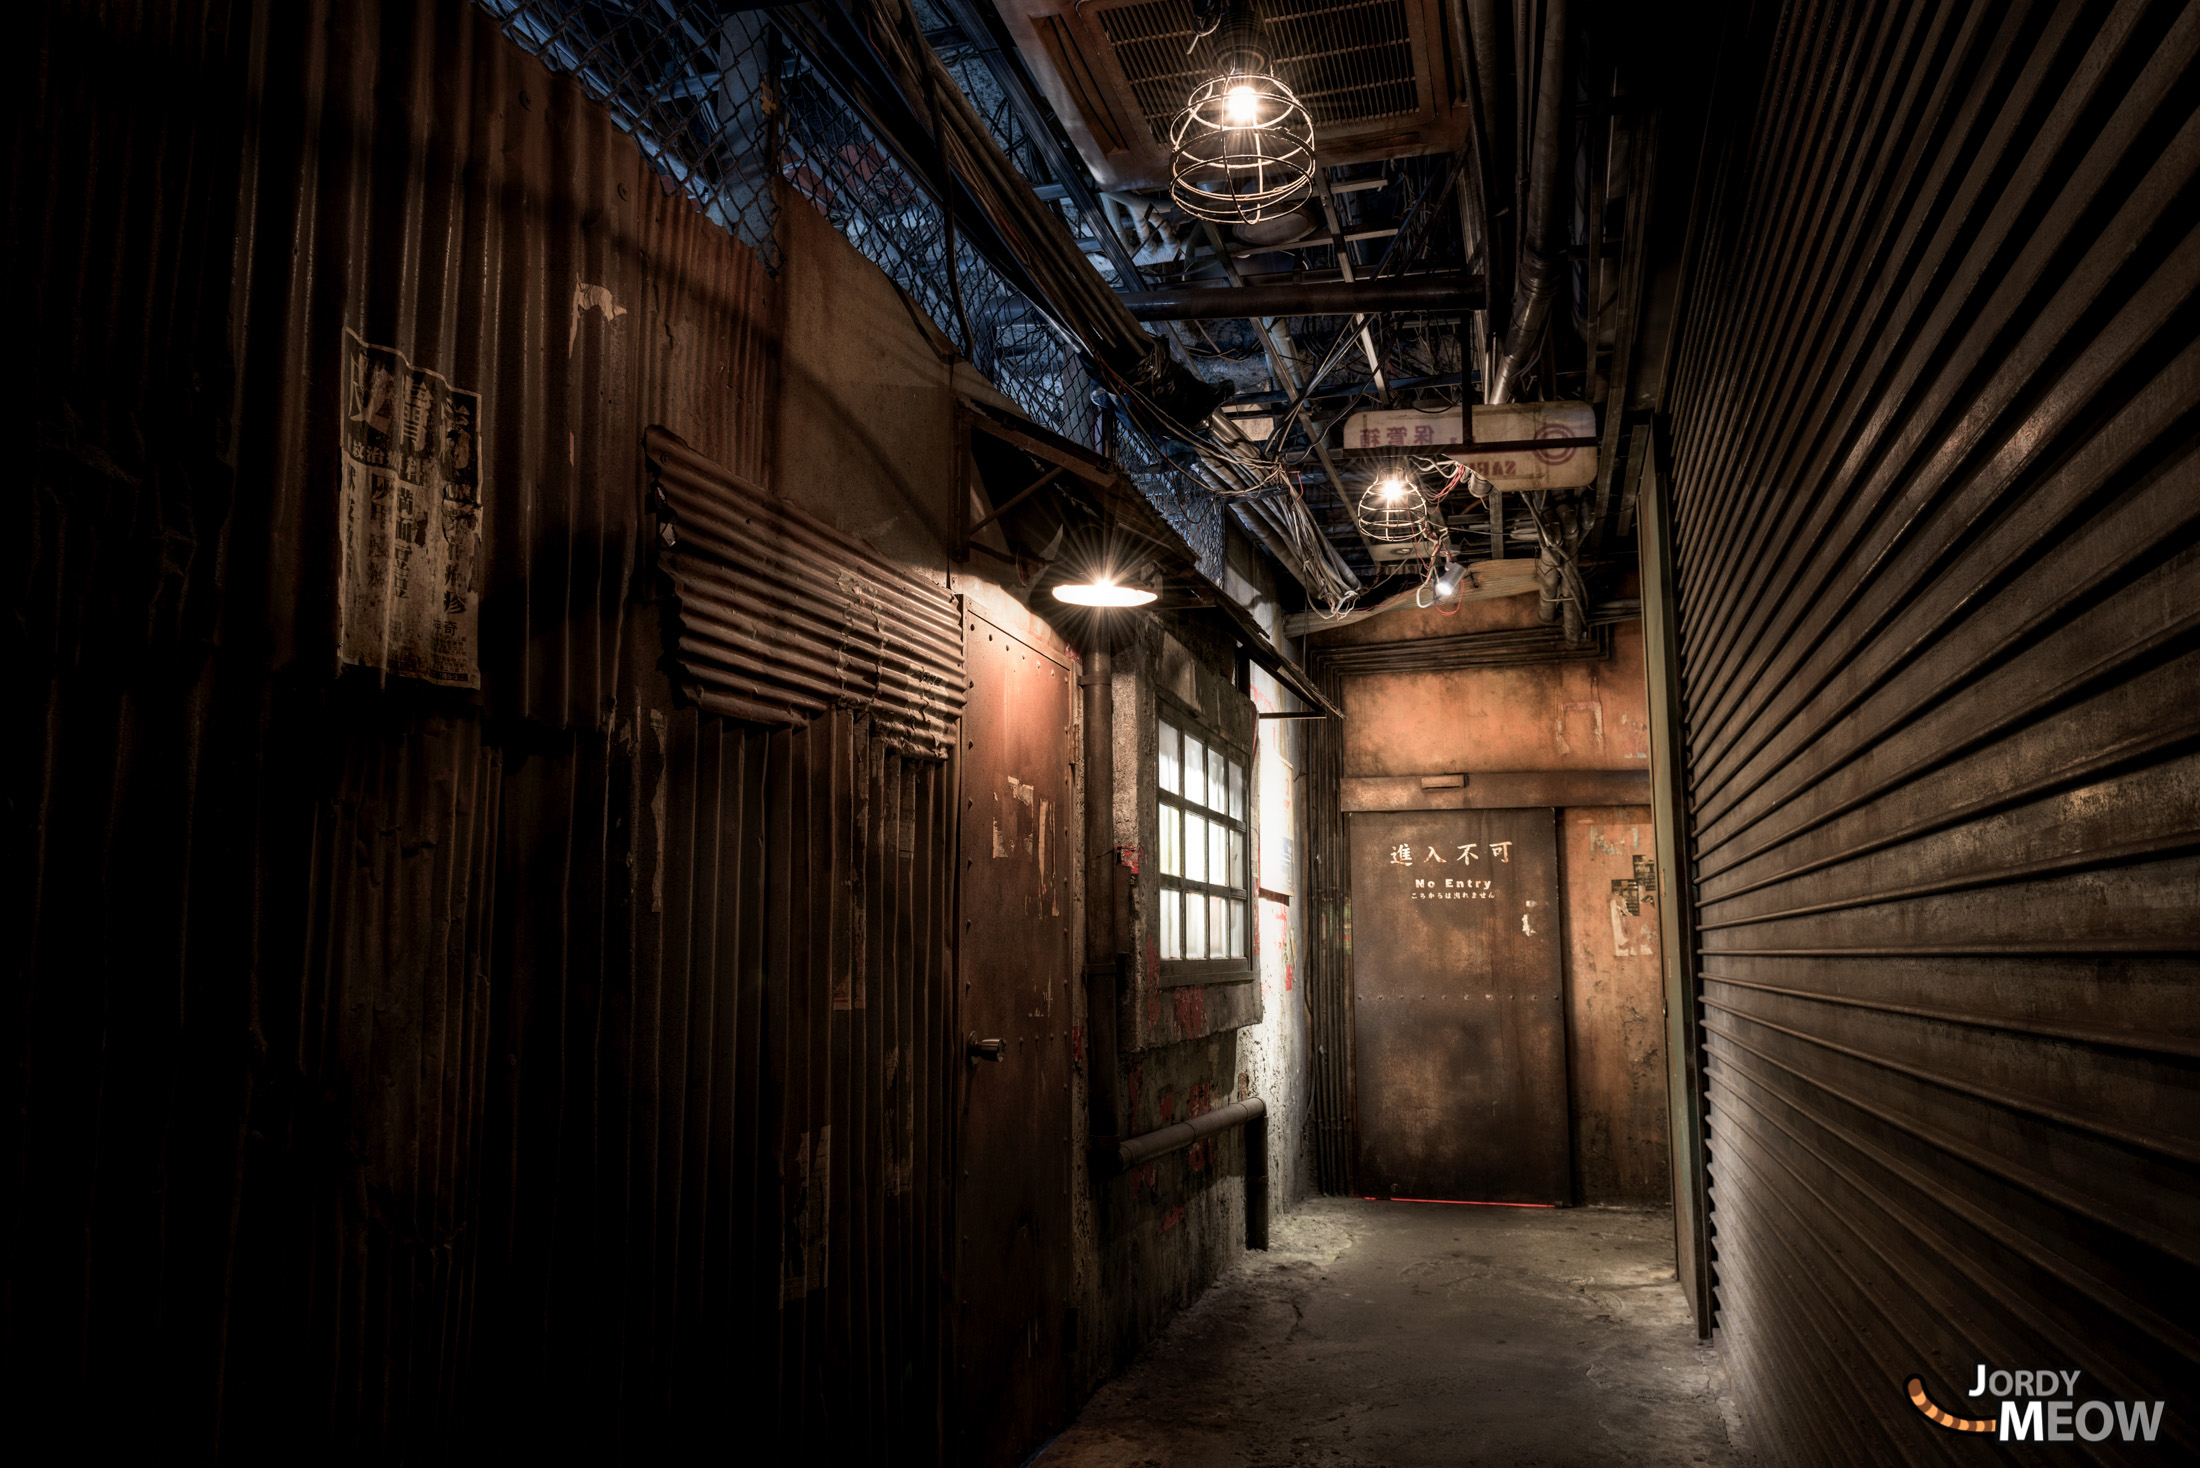 Abandoned gaming center: Kawasaki Warehouse urban exploration captures eerie decay and gaming ambiance.